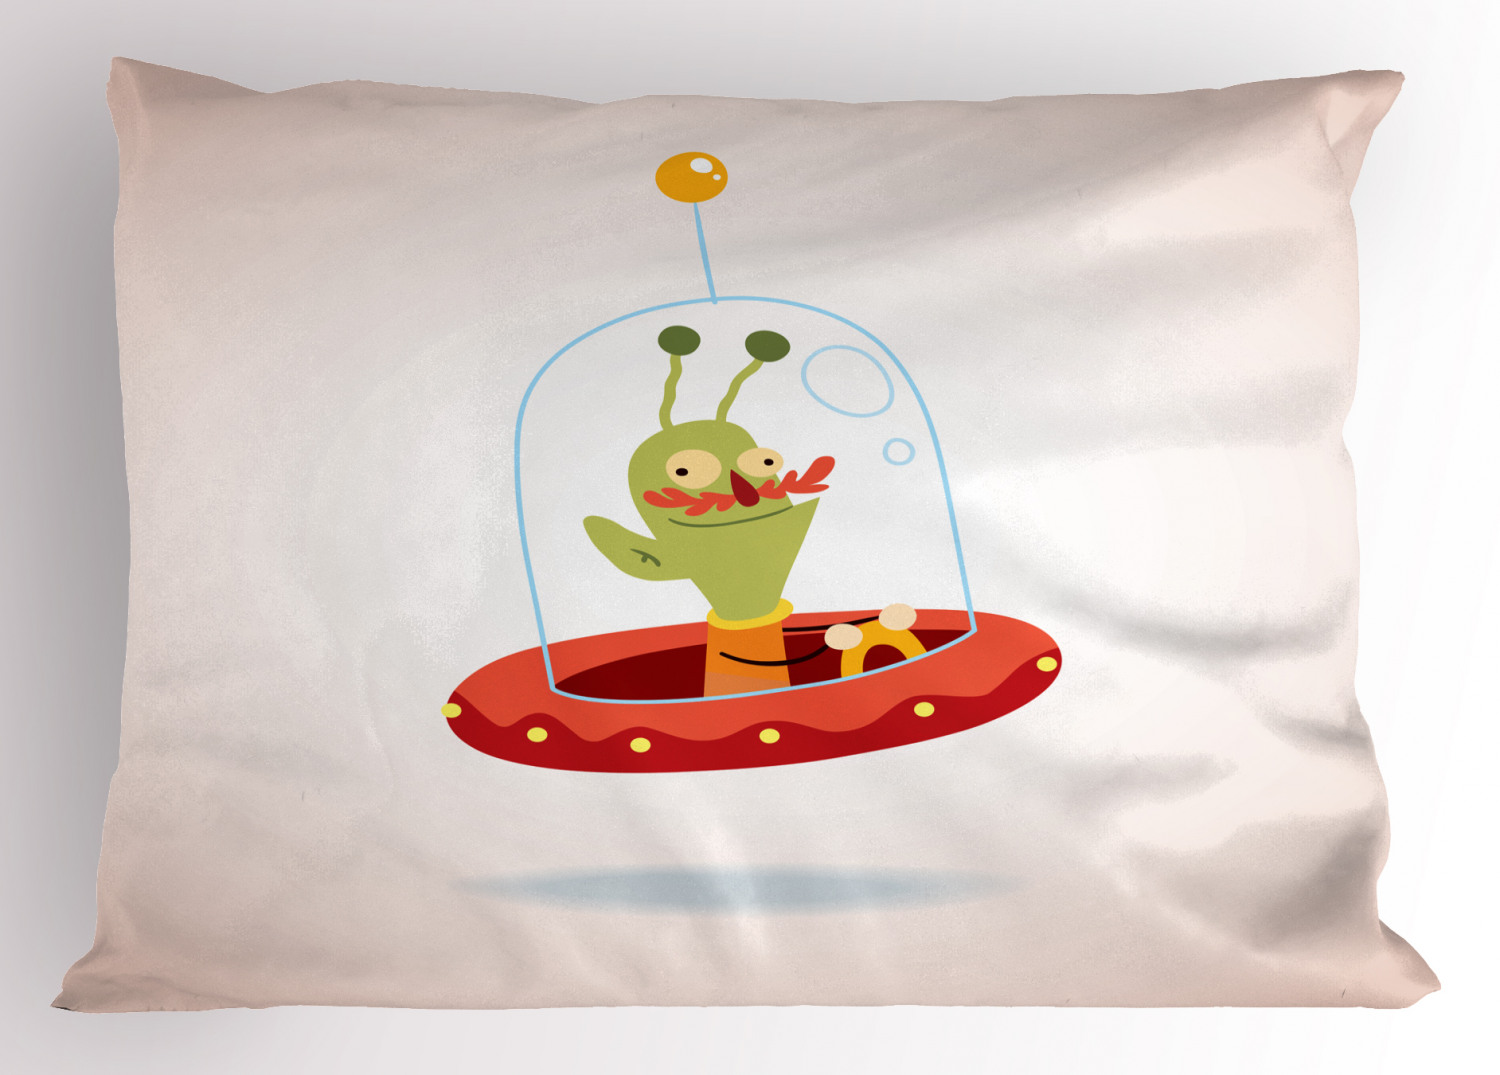 Details about   Astronaut Pillow Sham Decorative Pillowcase 3 Sizes Available for Bedroom Decor 